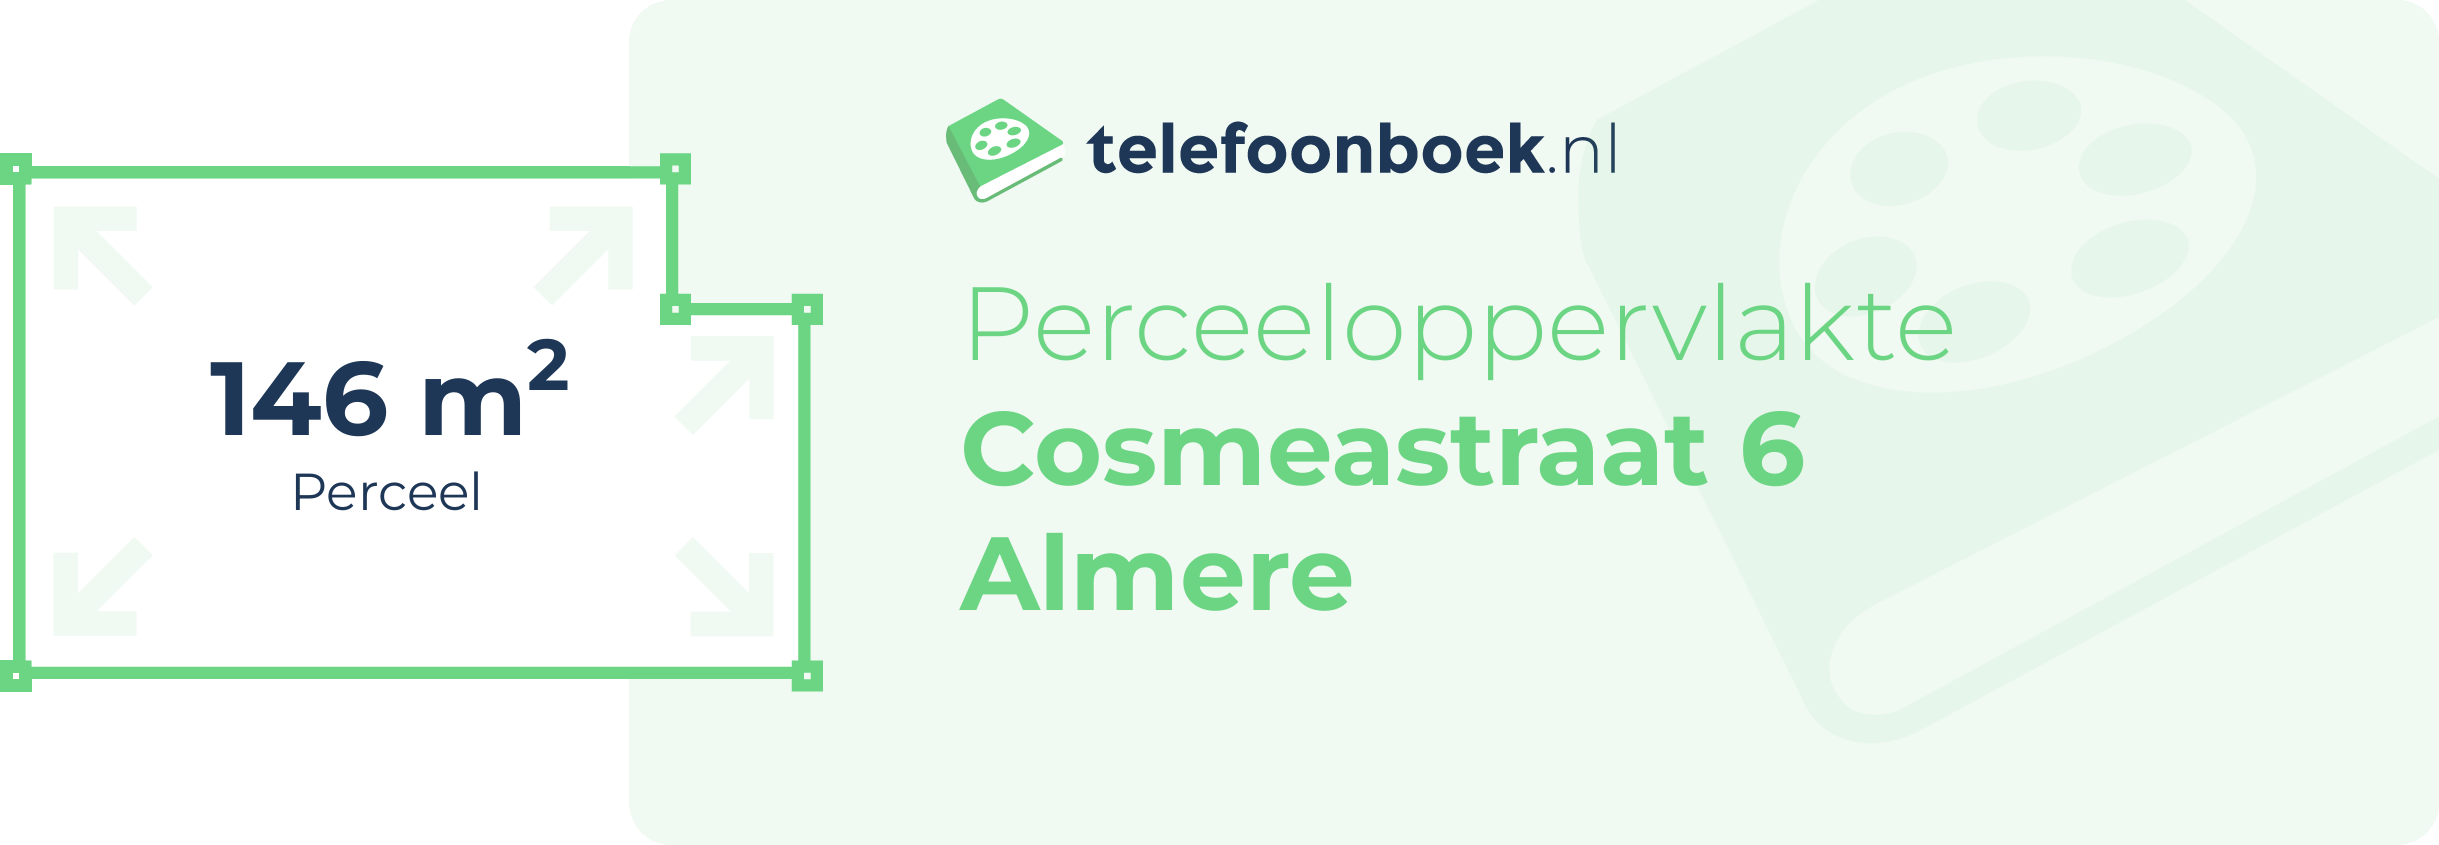 Perceeloppervlakte Cosmeastraat 6 Almere